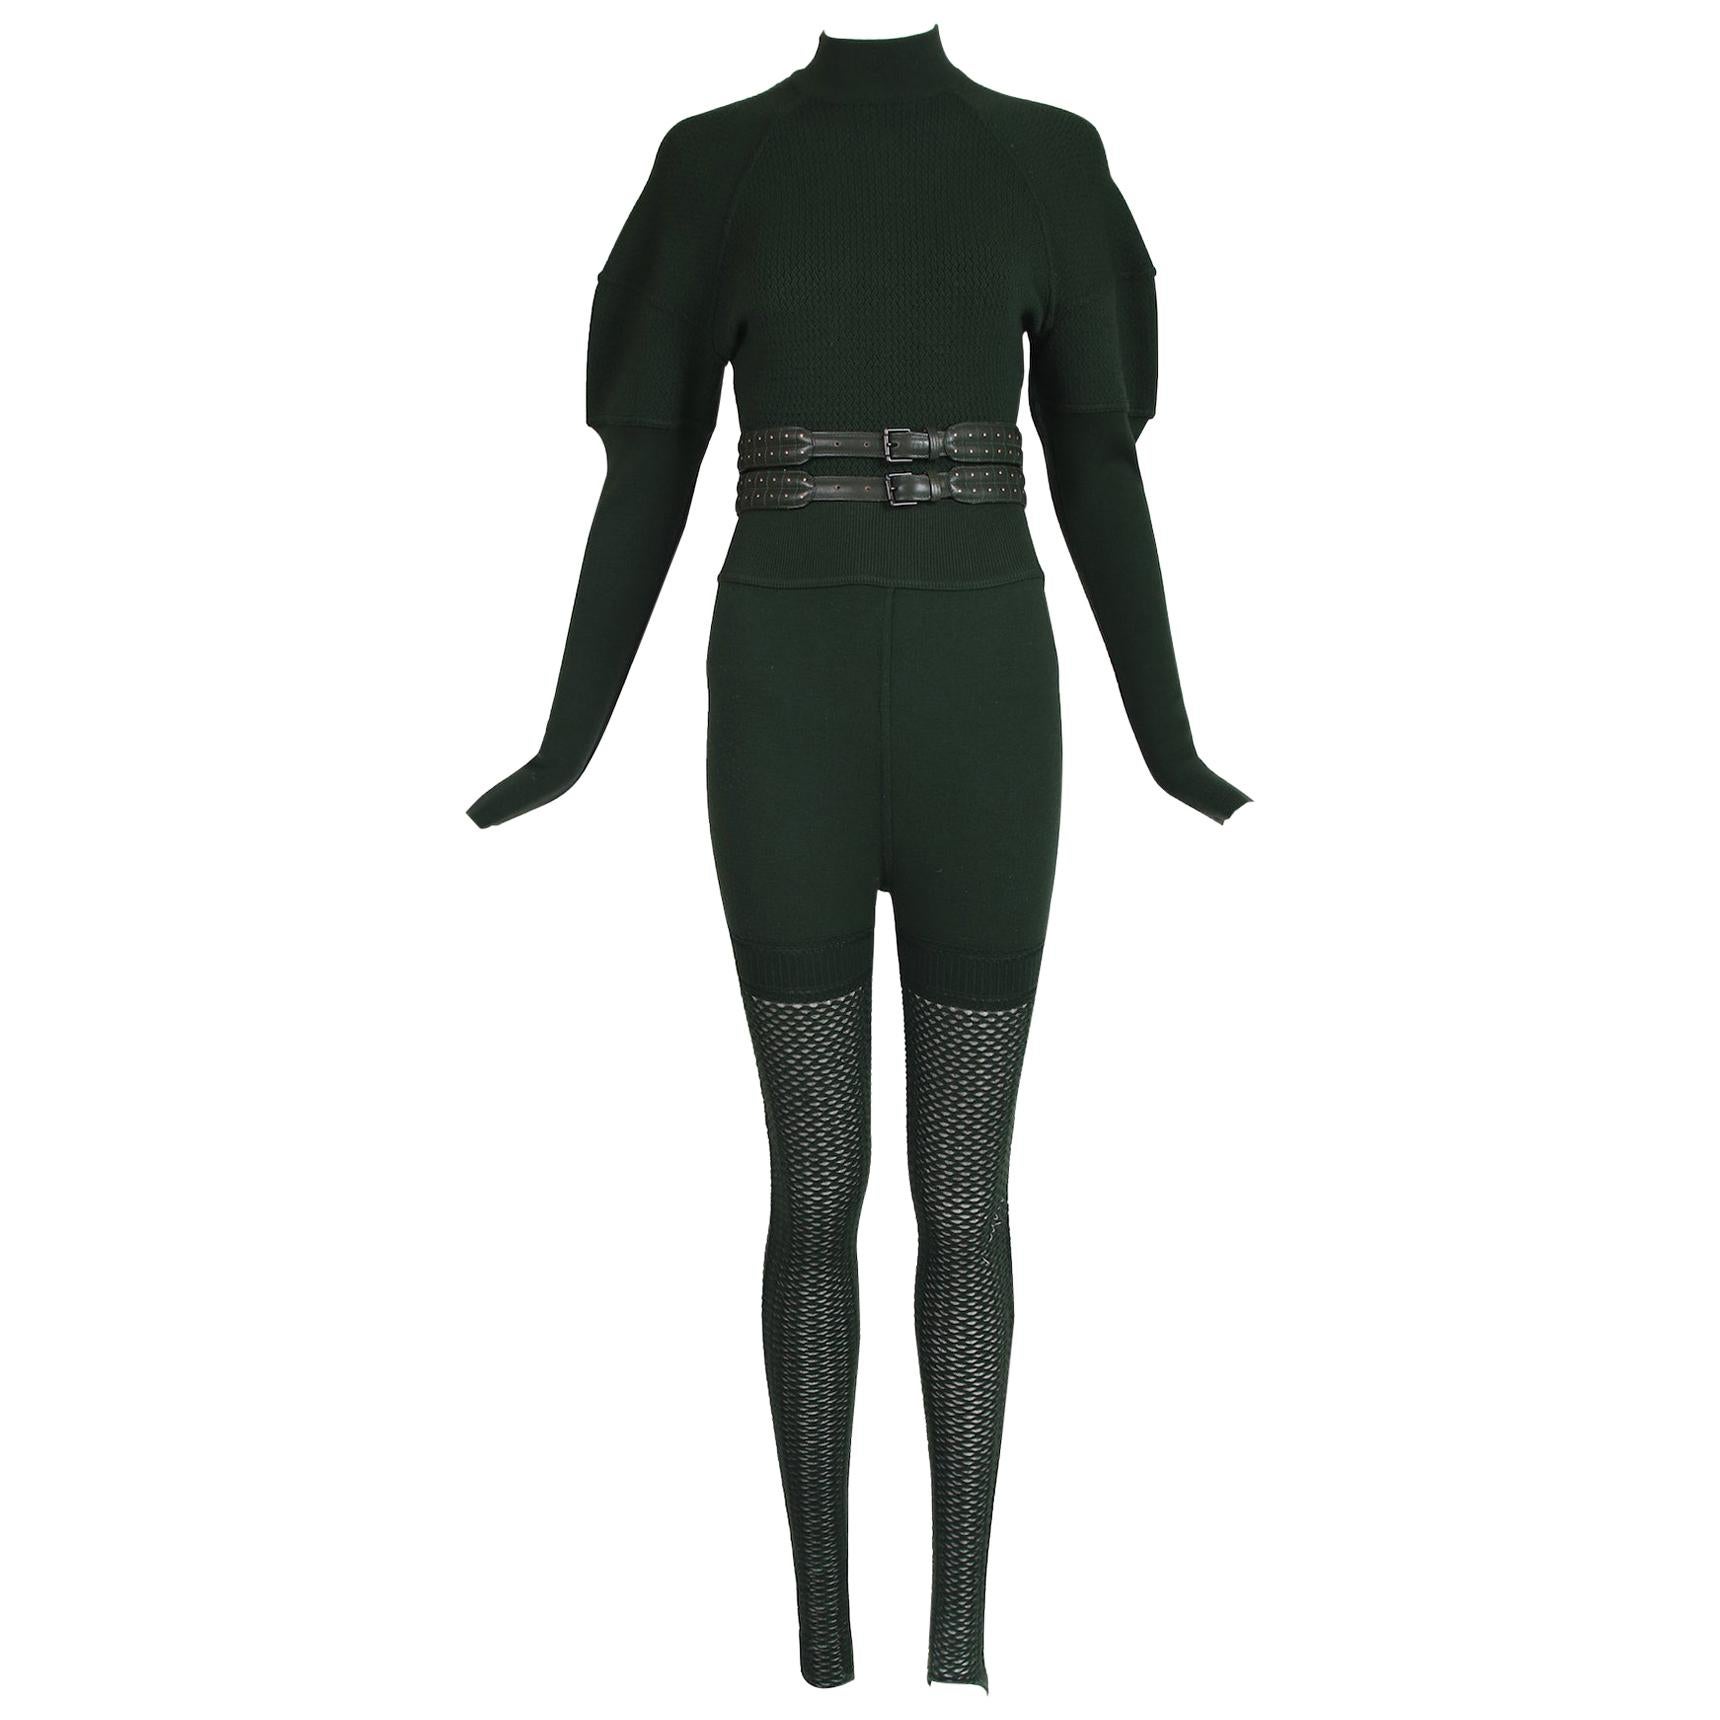 Alaia Grüner Strick-Body-Anzug, Steigbügel-Leggings und passender Ledergürtel im Angebot